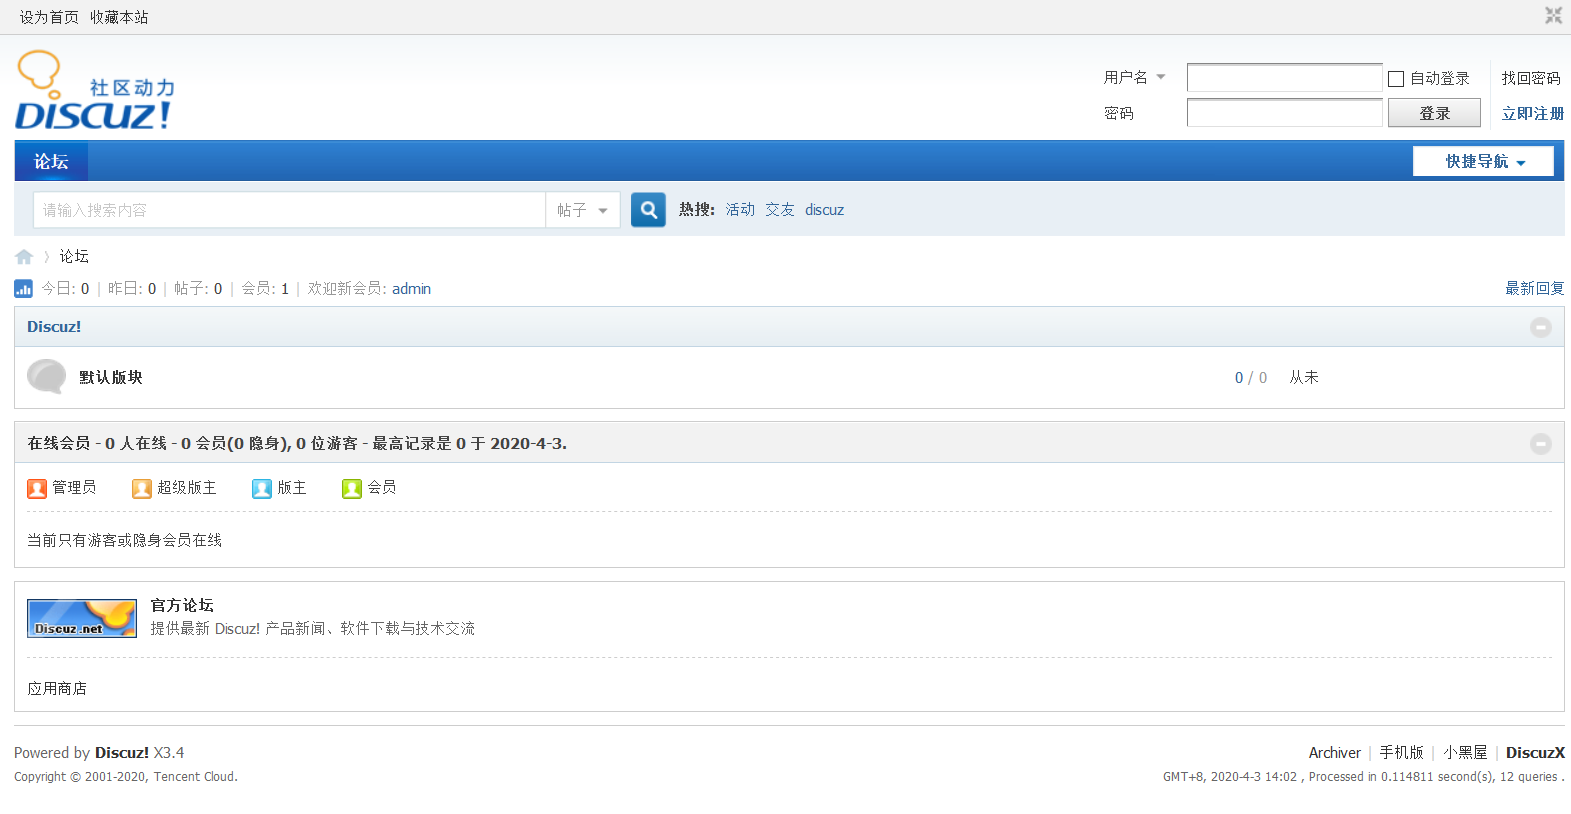 Viewforum php forum. Boyxzeed2 similar. Boyxzeed Discuz. Форум php. Boyxzeed Chinese.